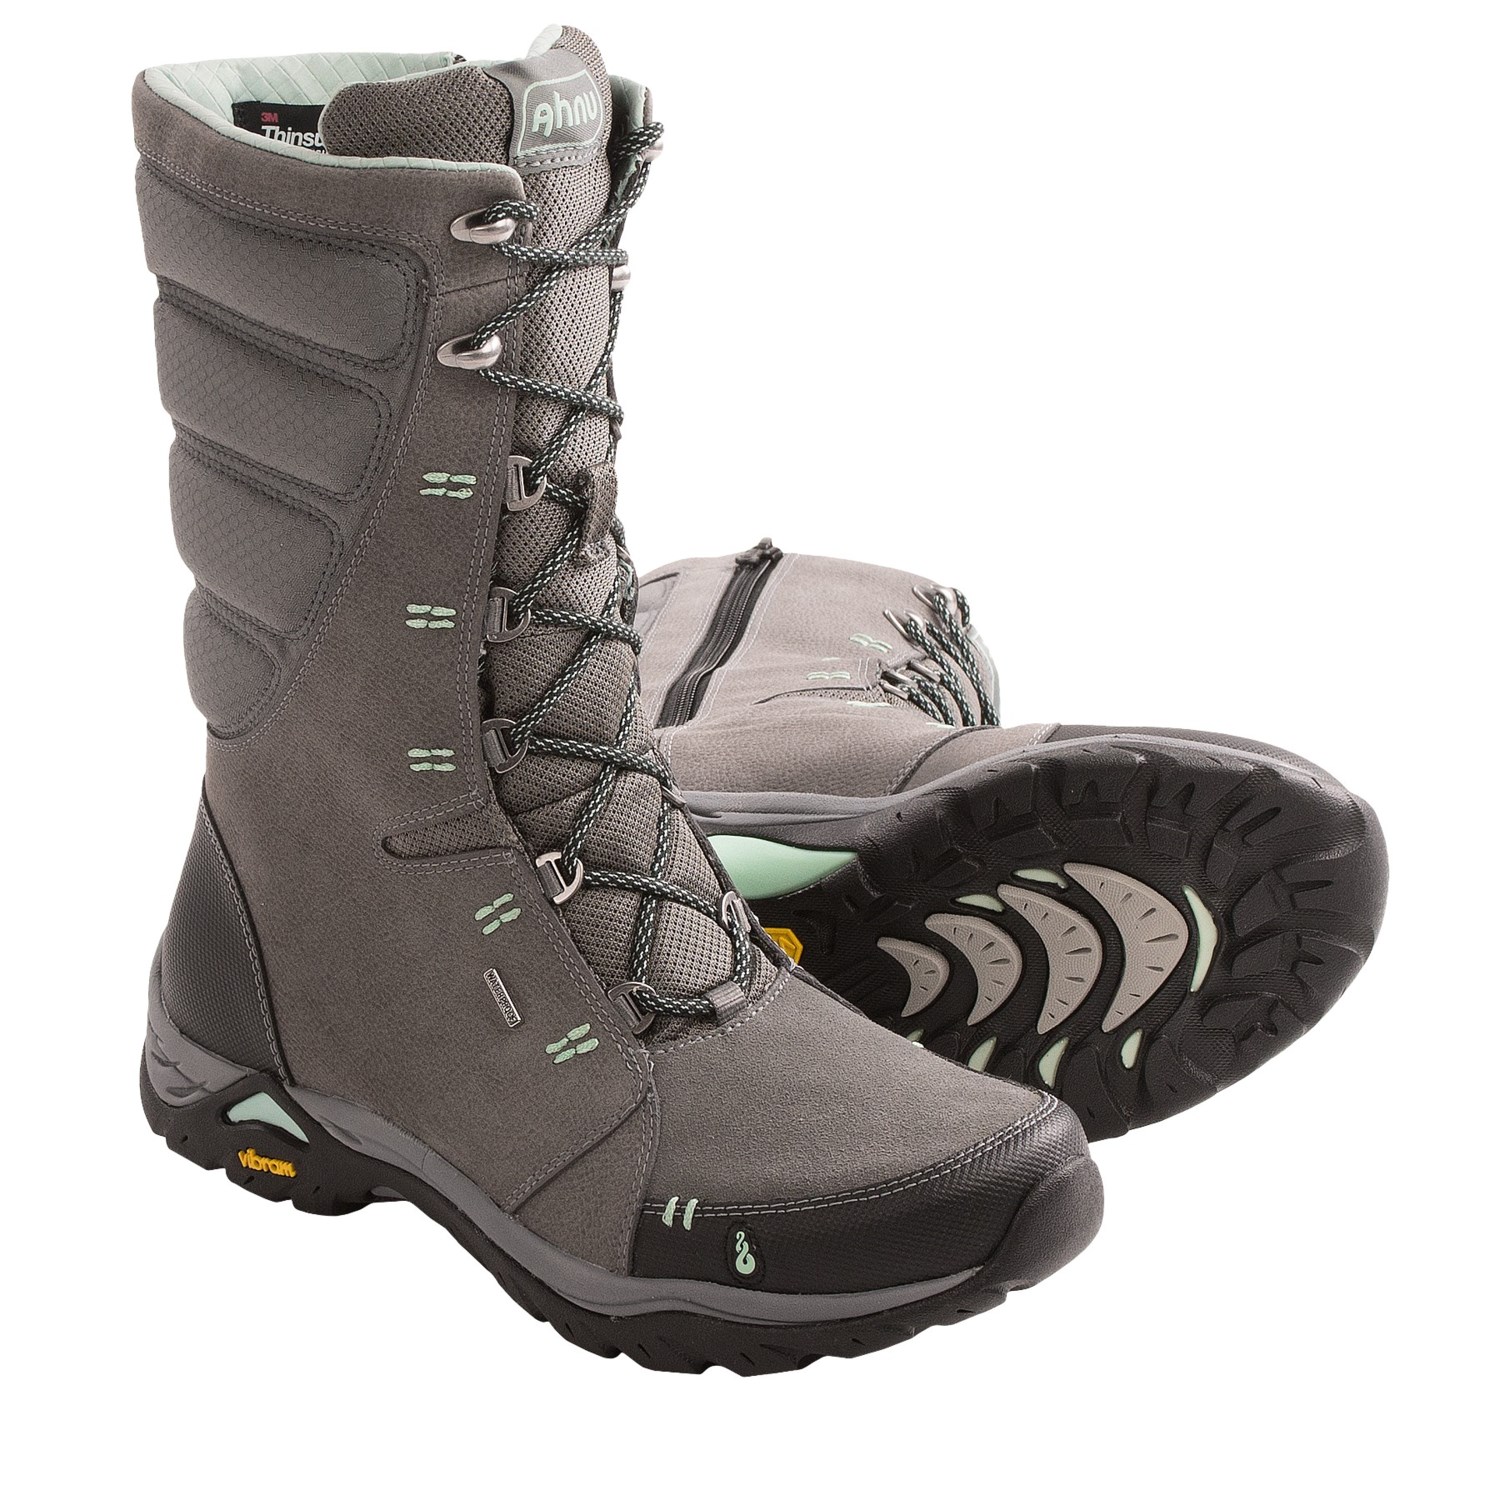 Ahnu Northridge Snow Boots (For Women) 8727F - Save 30%